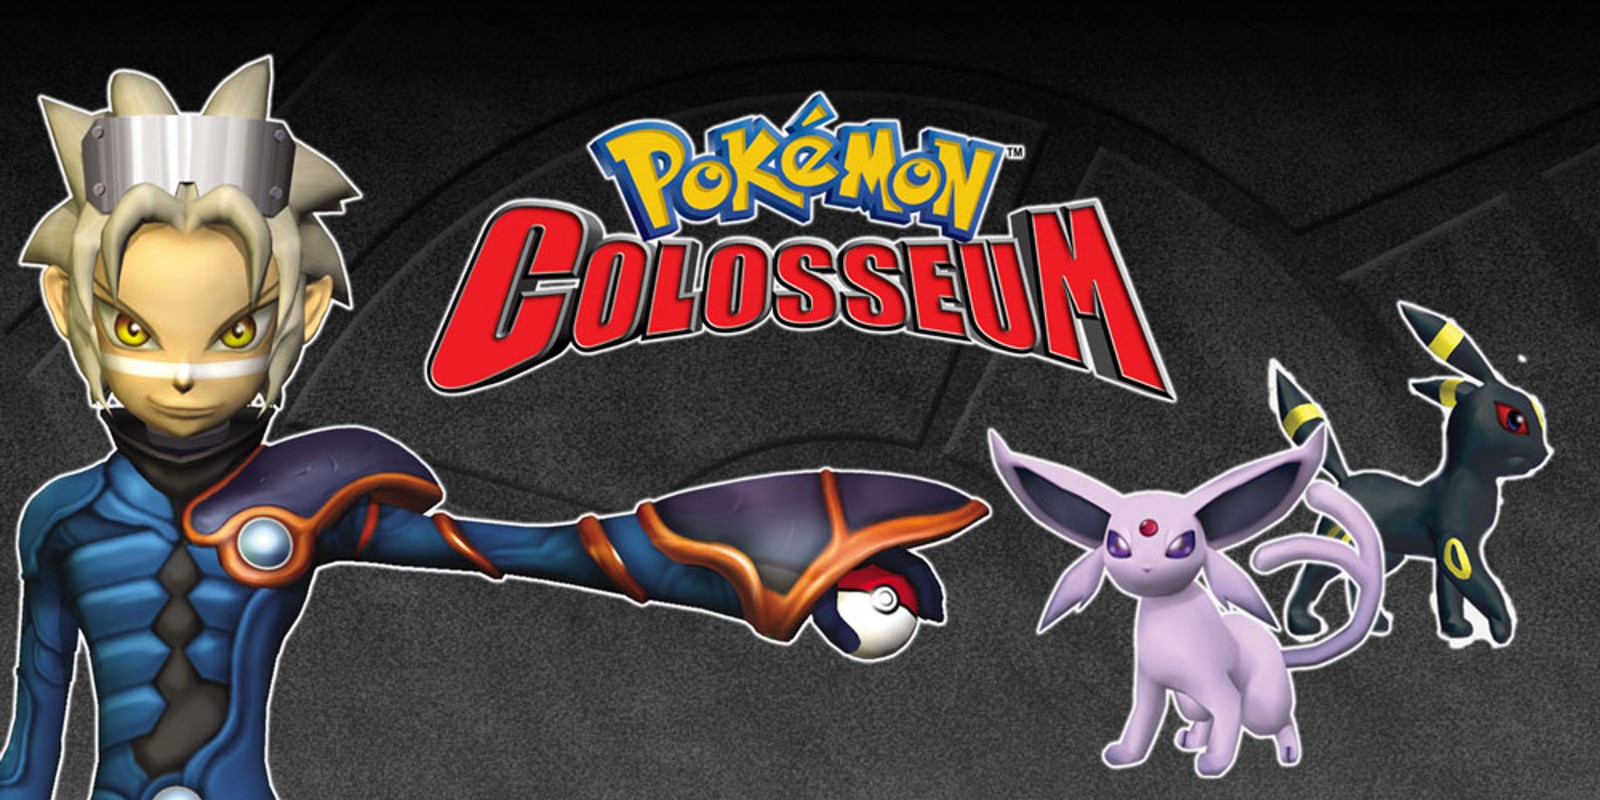 Pokemon colosseum free download for pc